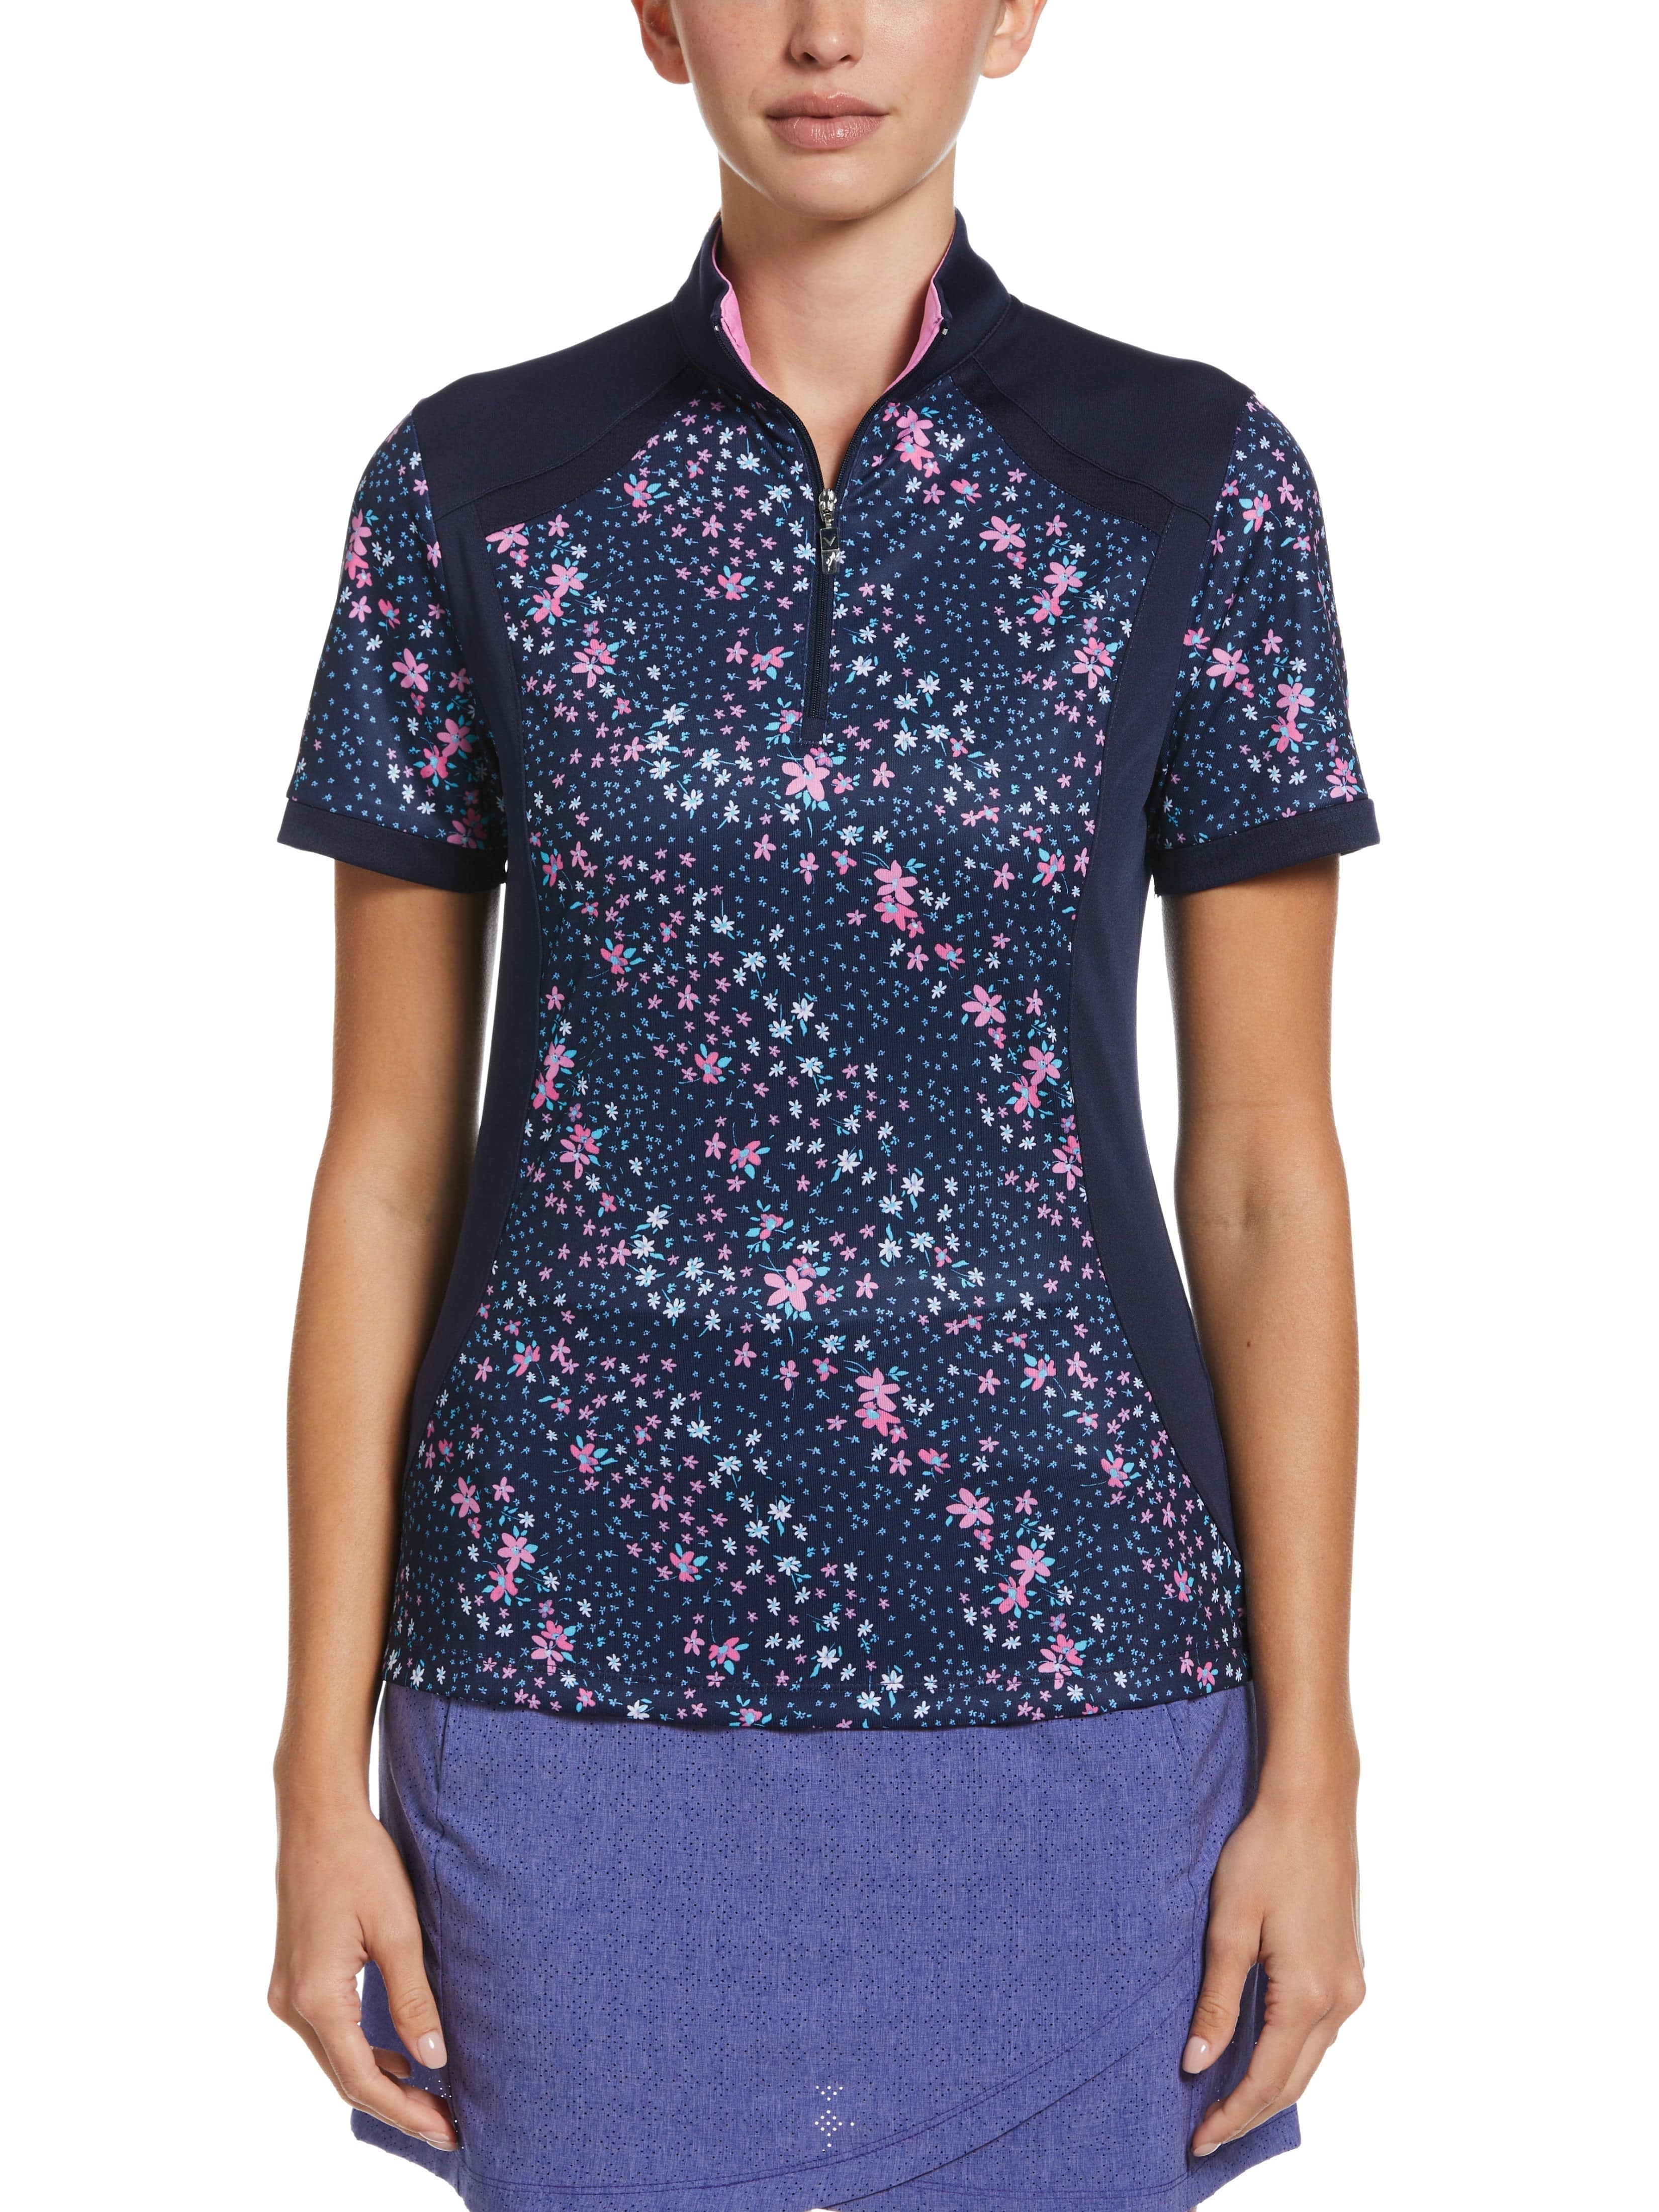 Callaway Apparel Womens Mini Floral Print Zip Golf Polo Shirt, Size Small, Navy Blue, 100% Polyester | Golf Apparel Shop